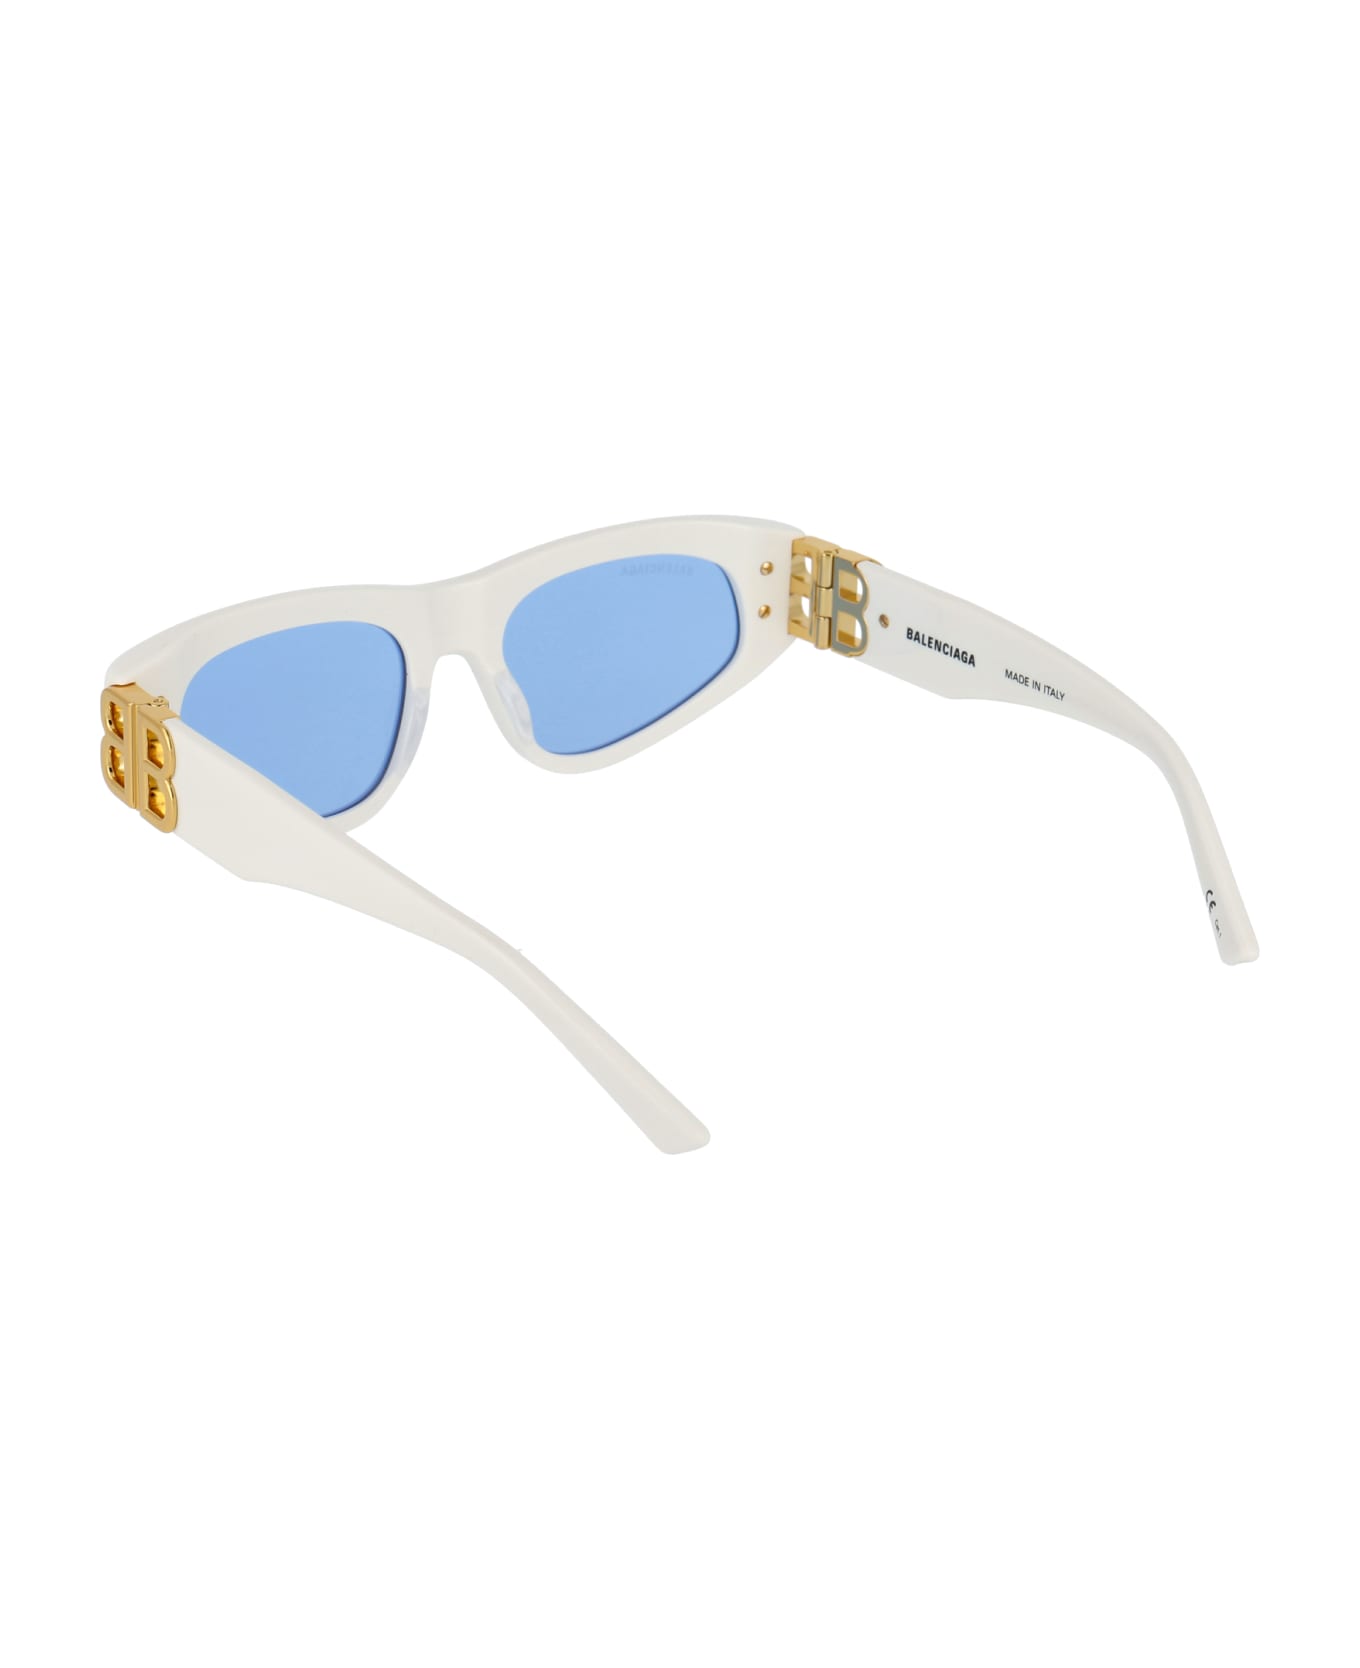 Balenciaga Eyewear Bb0095s Sunglasses - 004 WHITE GOLD LIGHT BLUE